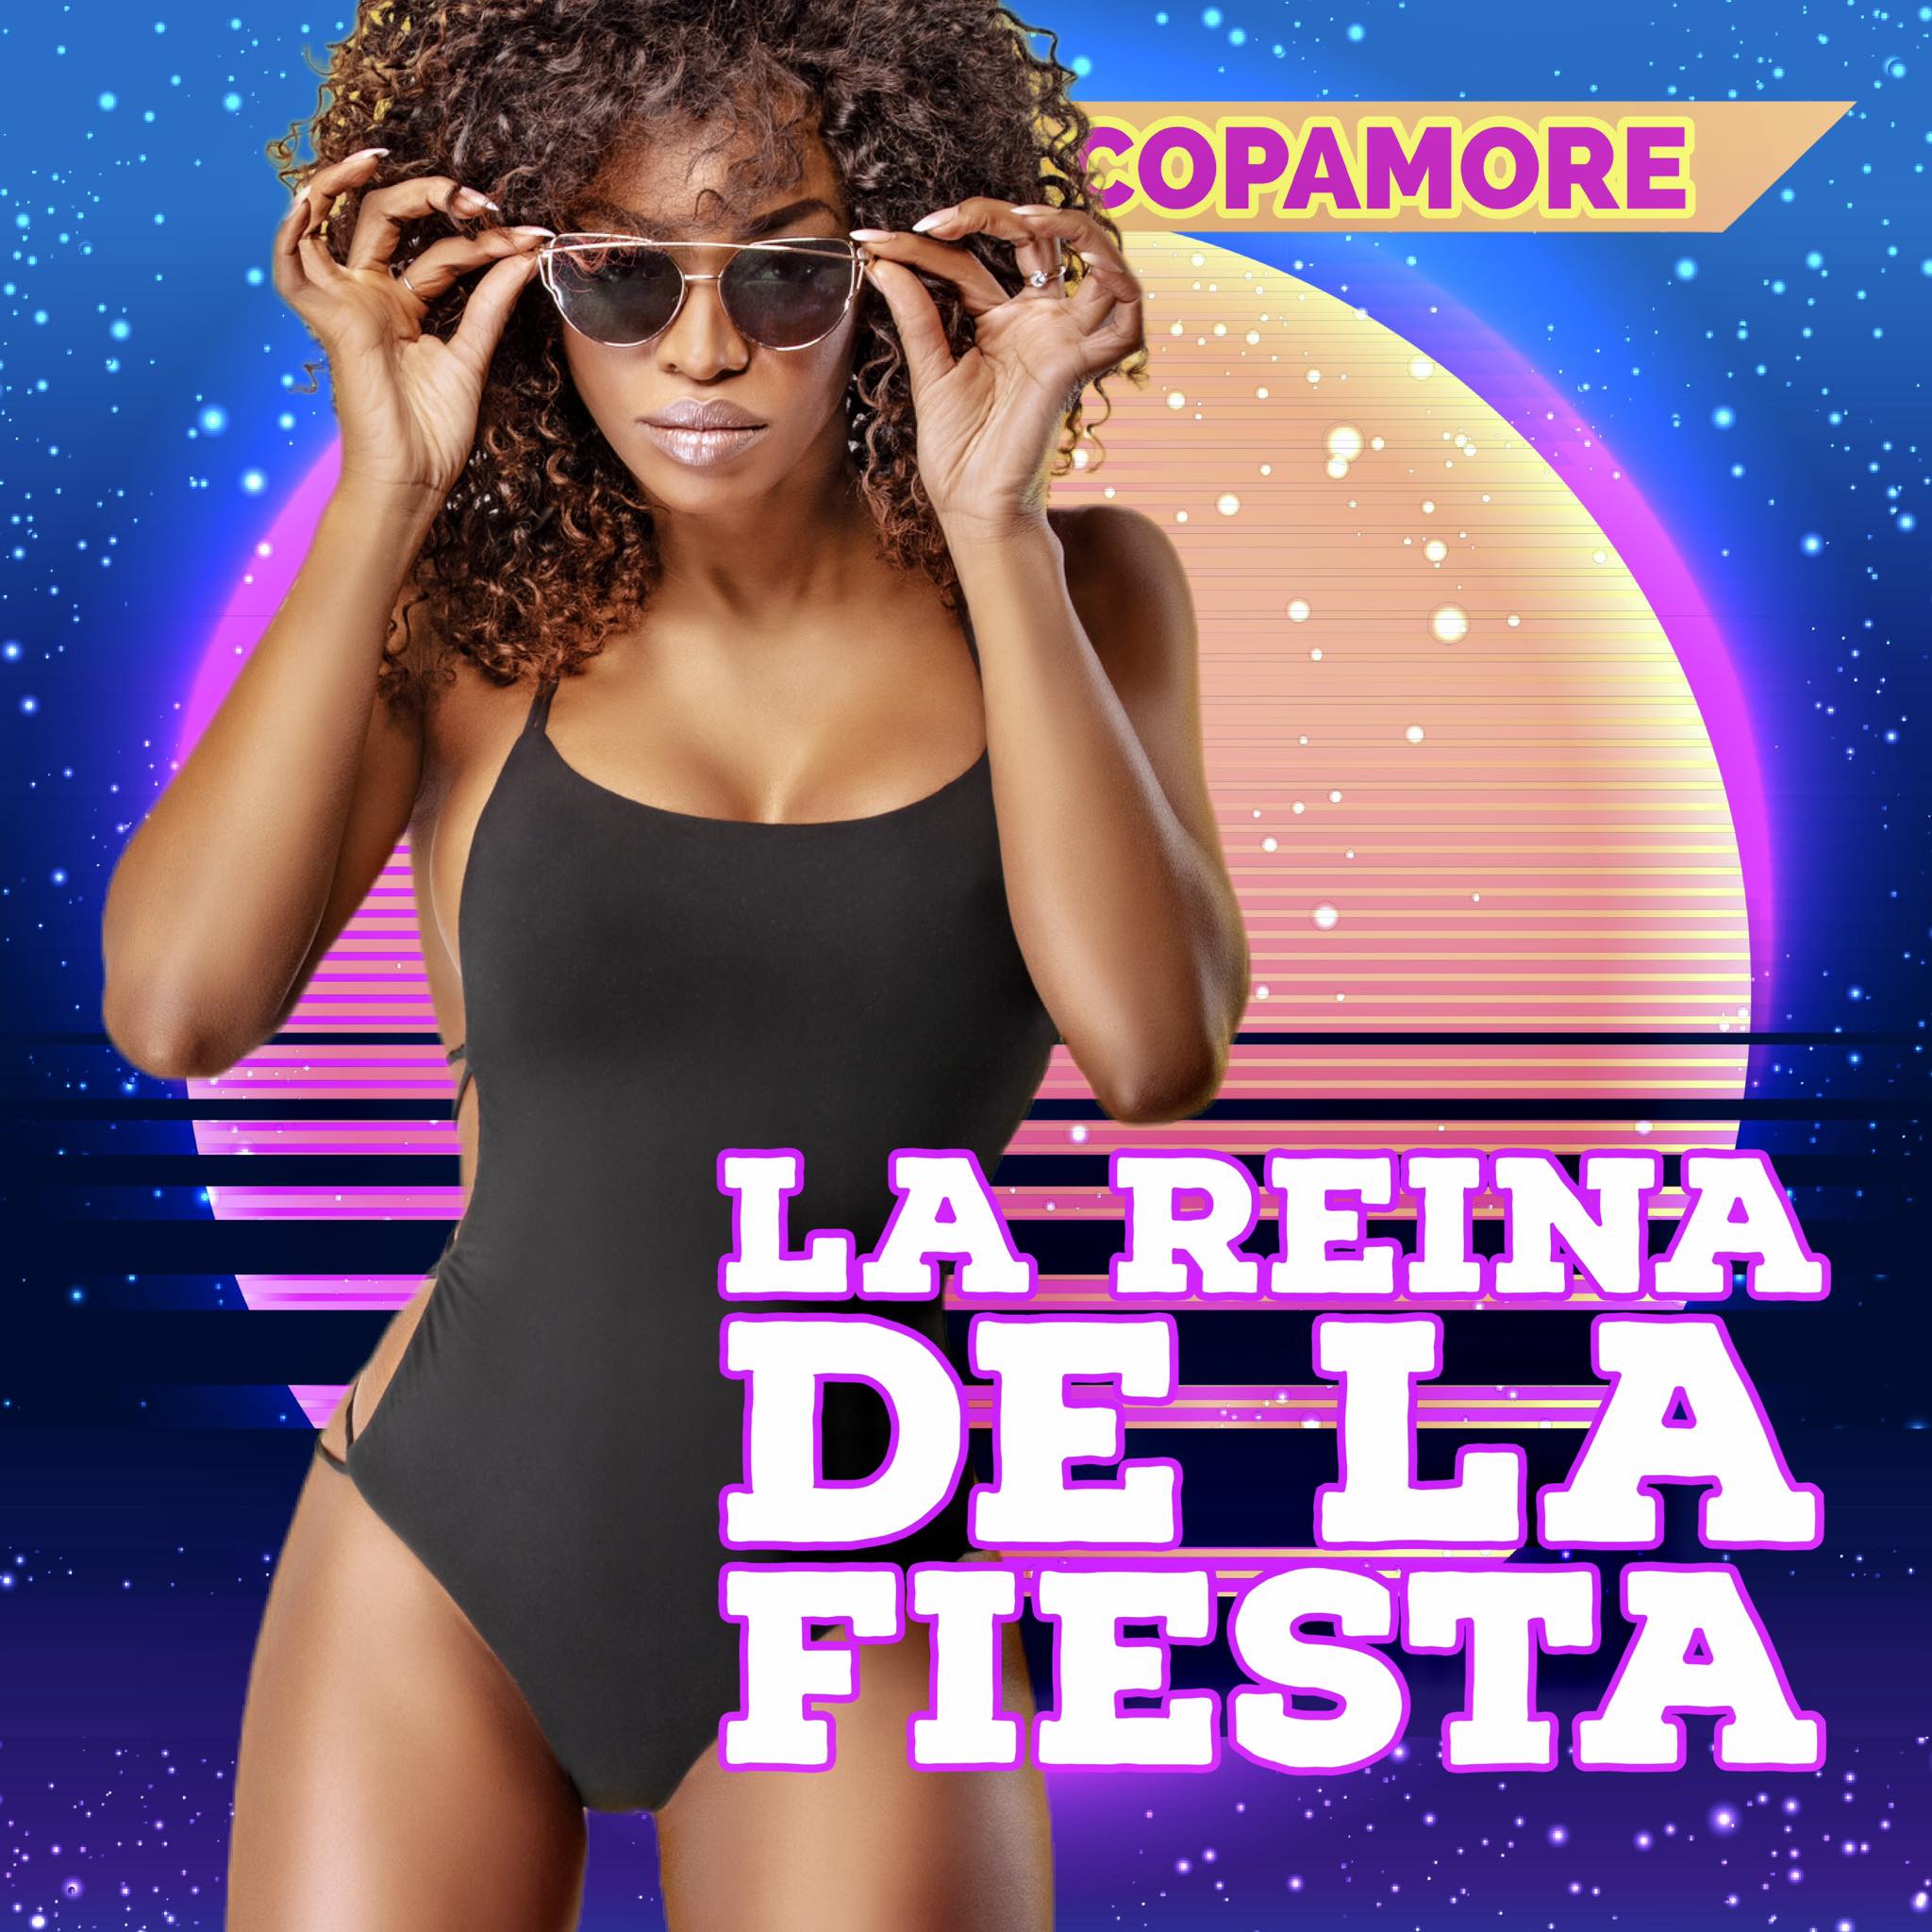 Copamore – Music Producer Diary Note 3: “La Reina De La Fiesta”, June 23